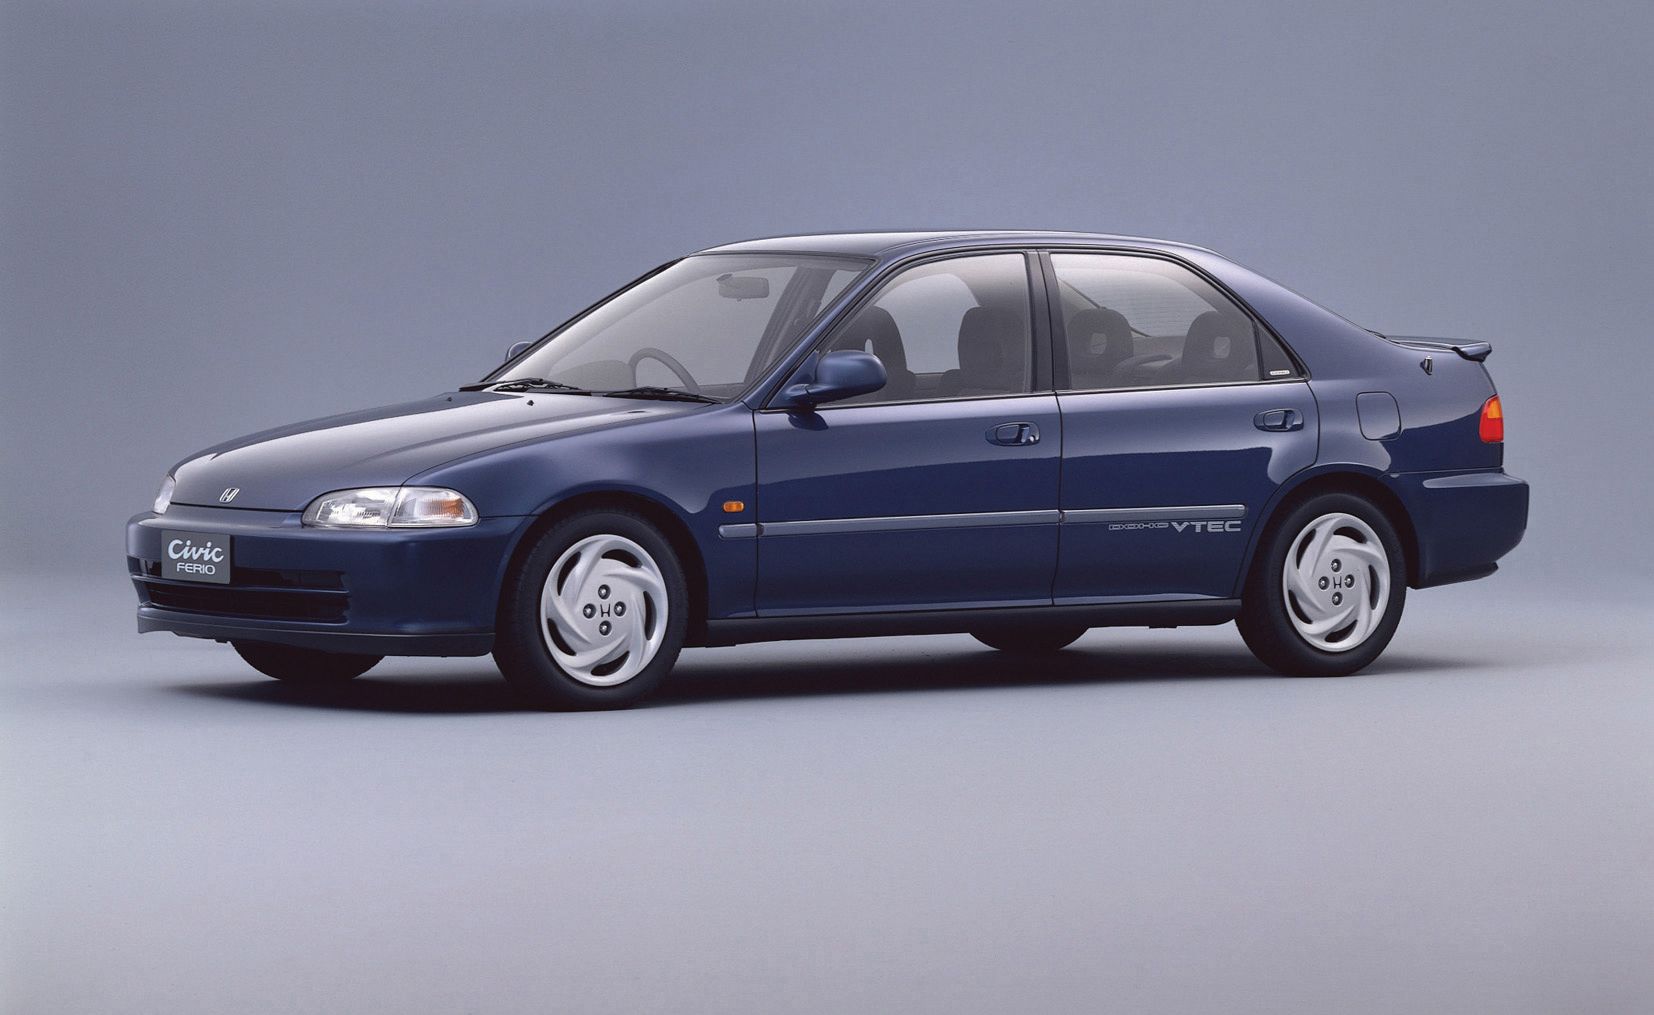 Хонда 95 год. Honda Civic 5 седан. Honda Civic 1995 EG. Хонда Цивик 5 поколения. Honda Civic 5 поколение седан.